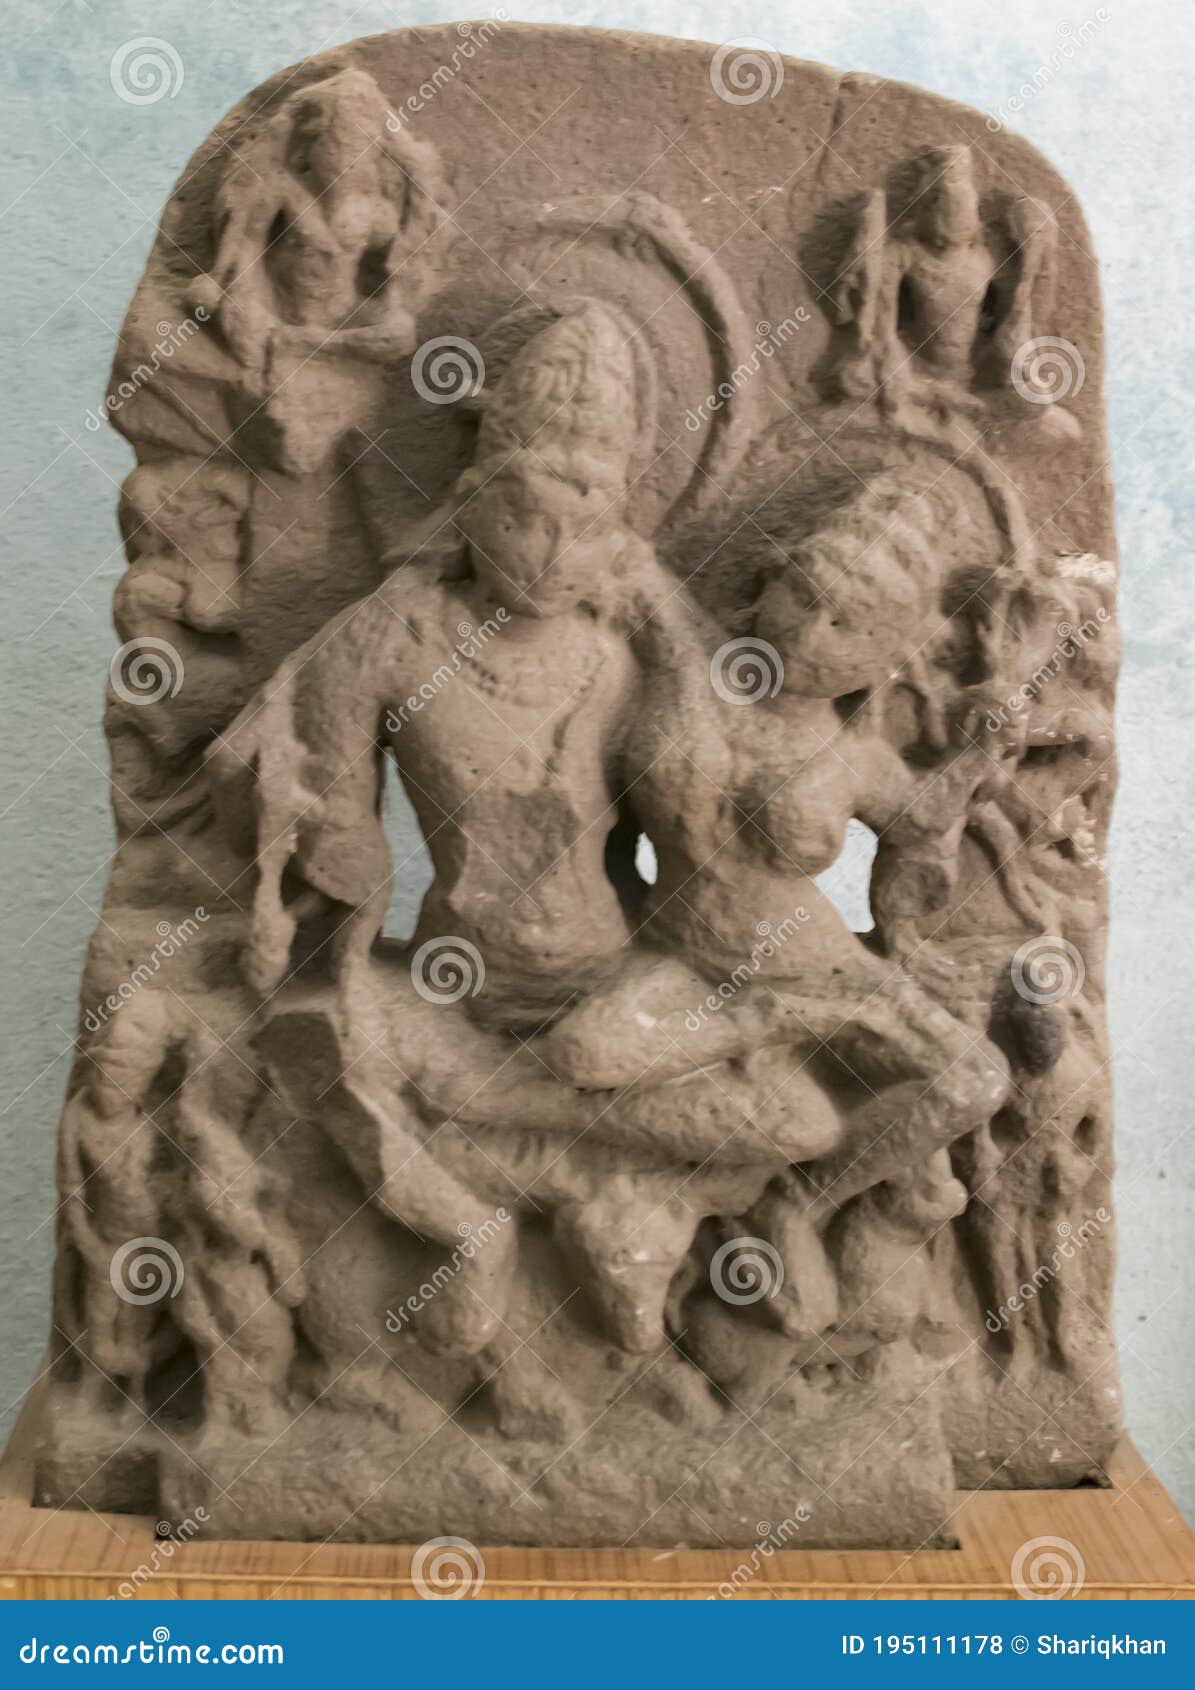 sandstone sculpture of lord shiva devi parvati uma maheshwar type central india madhya pradesh